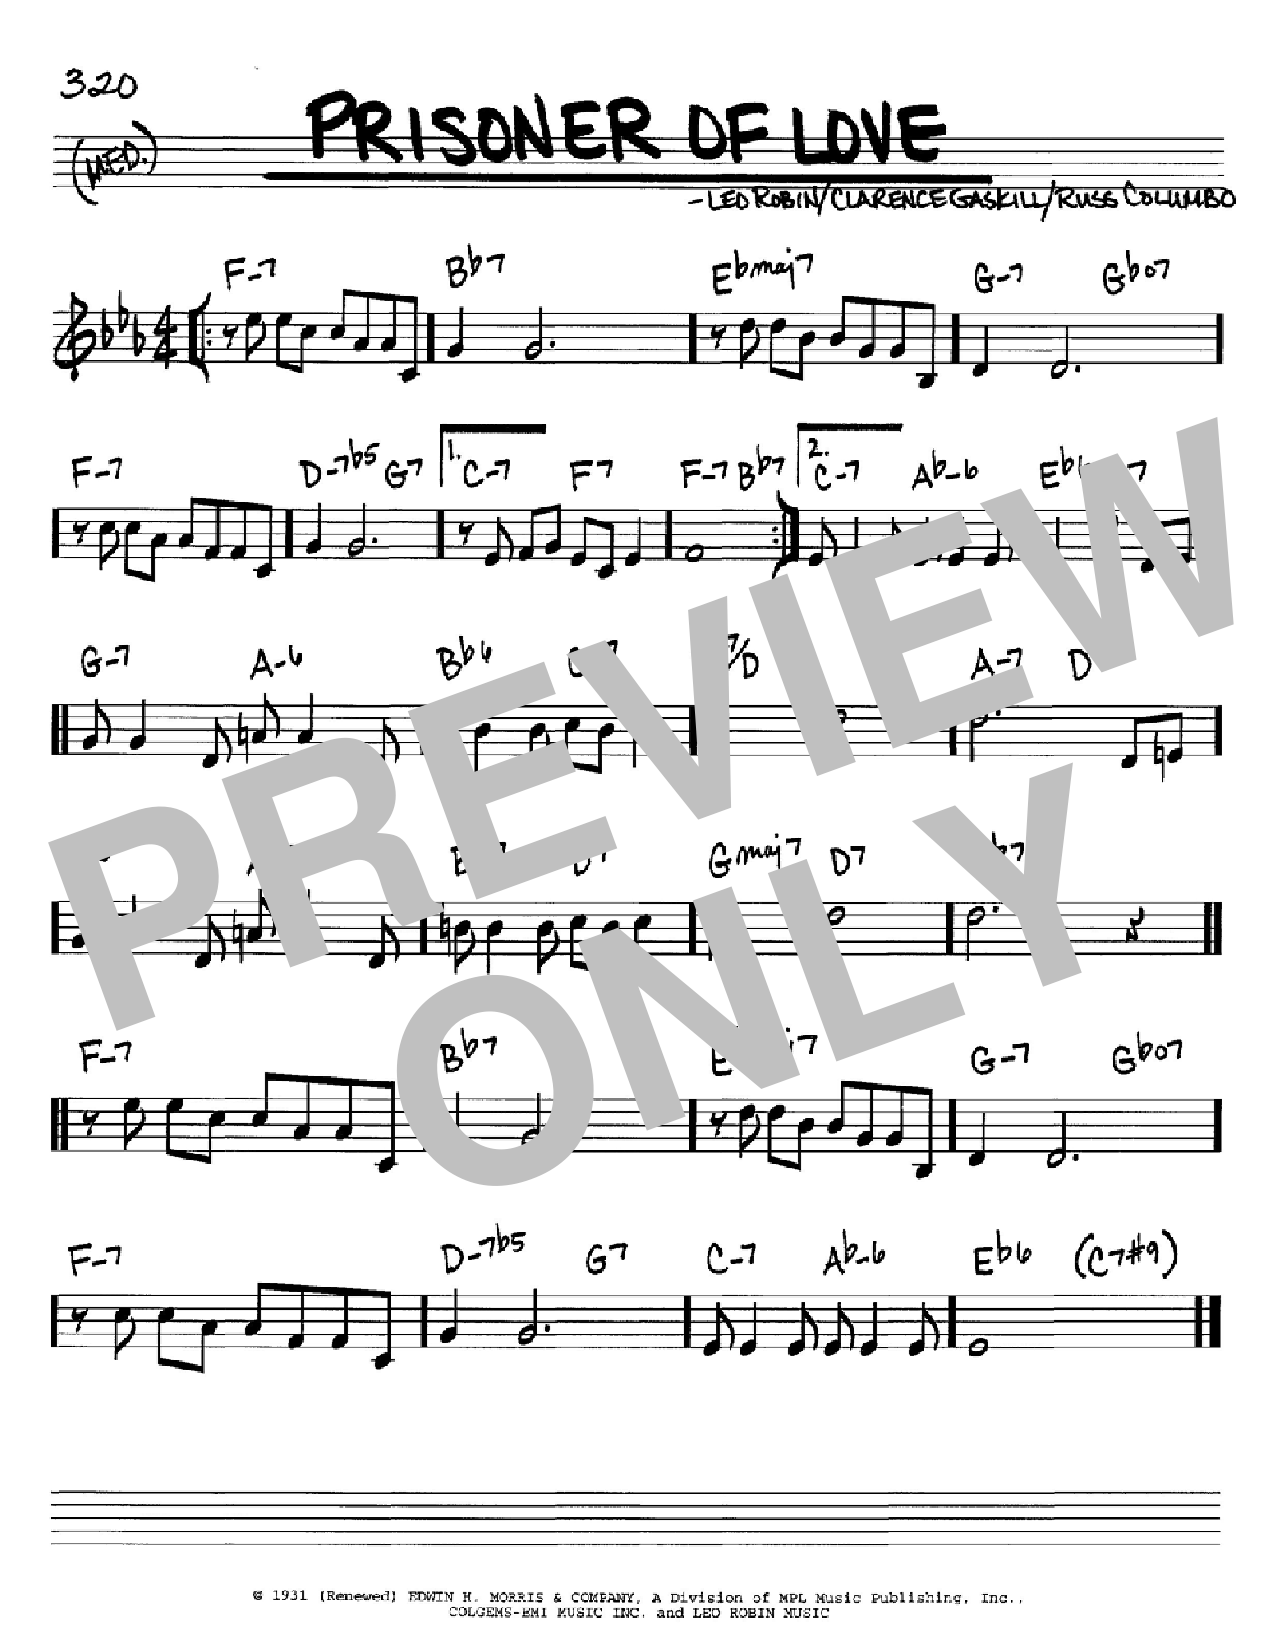 Leo Robin Prisoner Of Love Sheet Music Notes & Chords for Real Book - Melody, Lyrics & Chords - C Instruments - Download or Print PDF